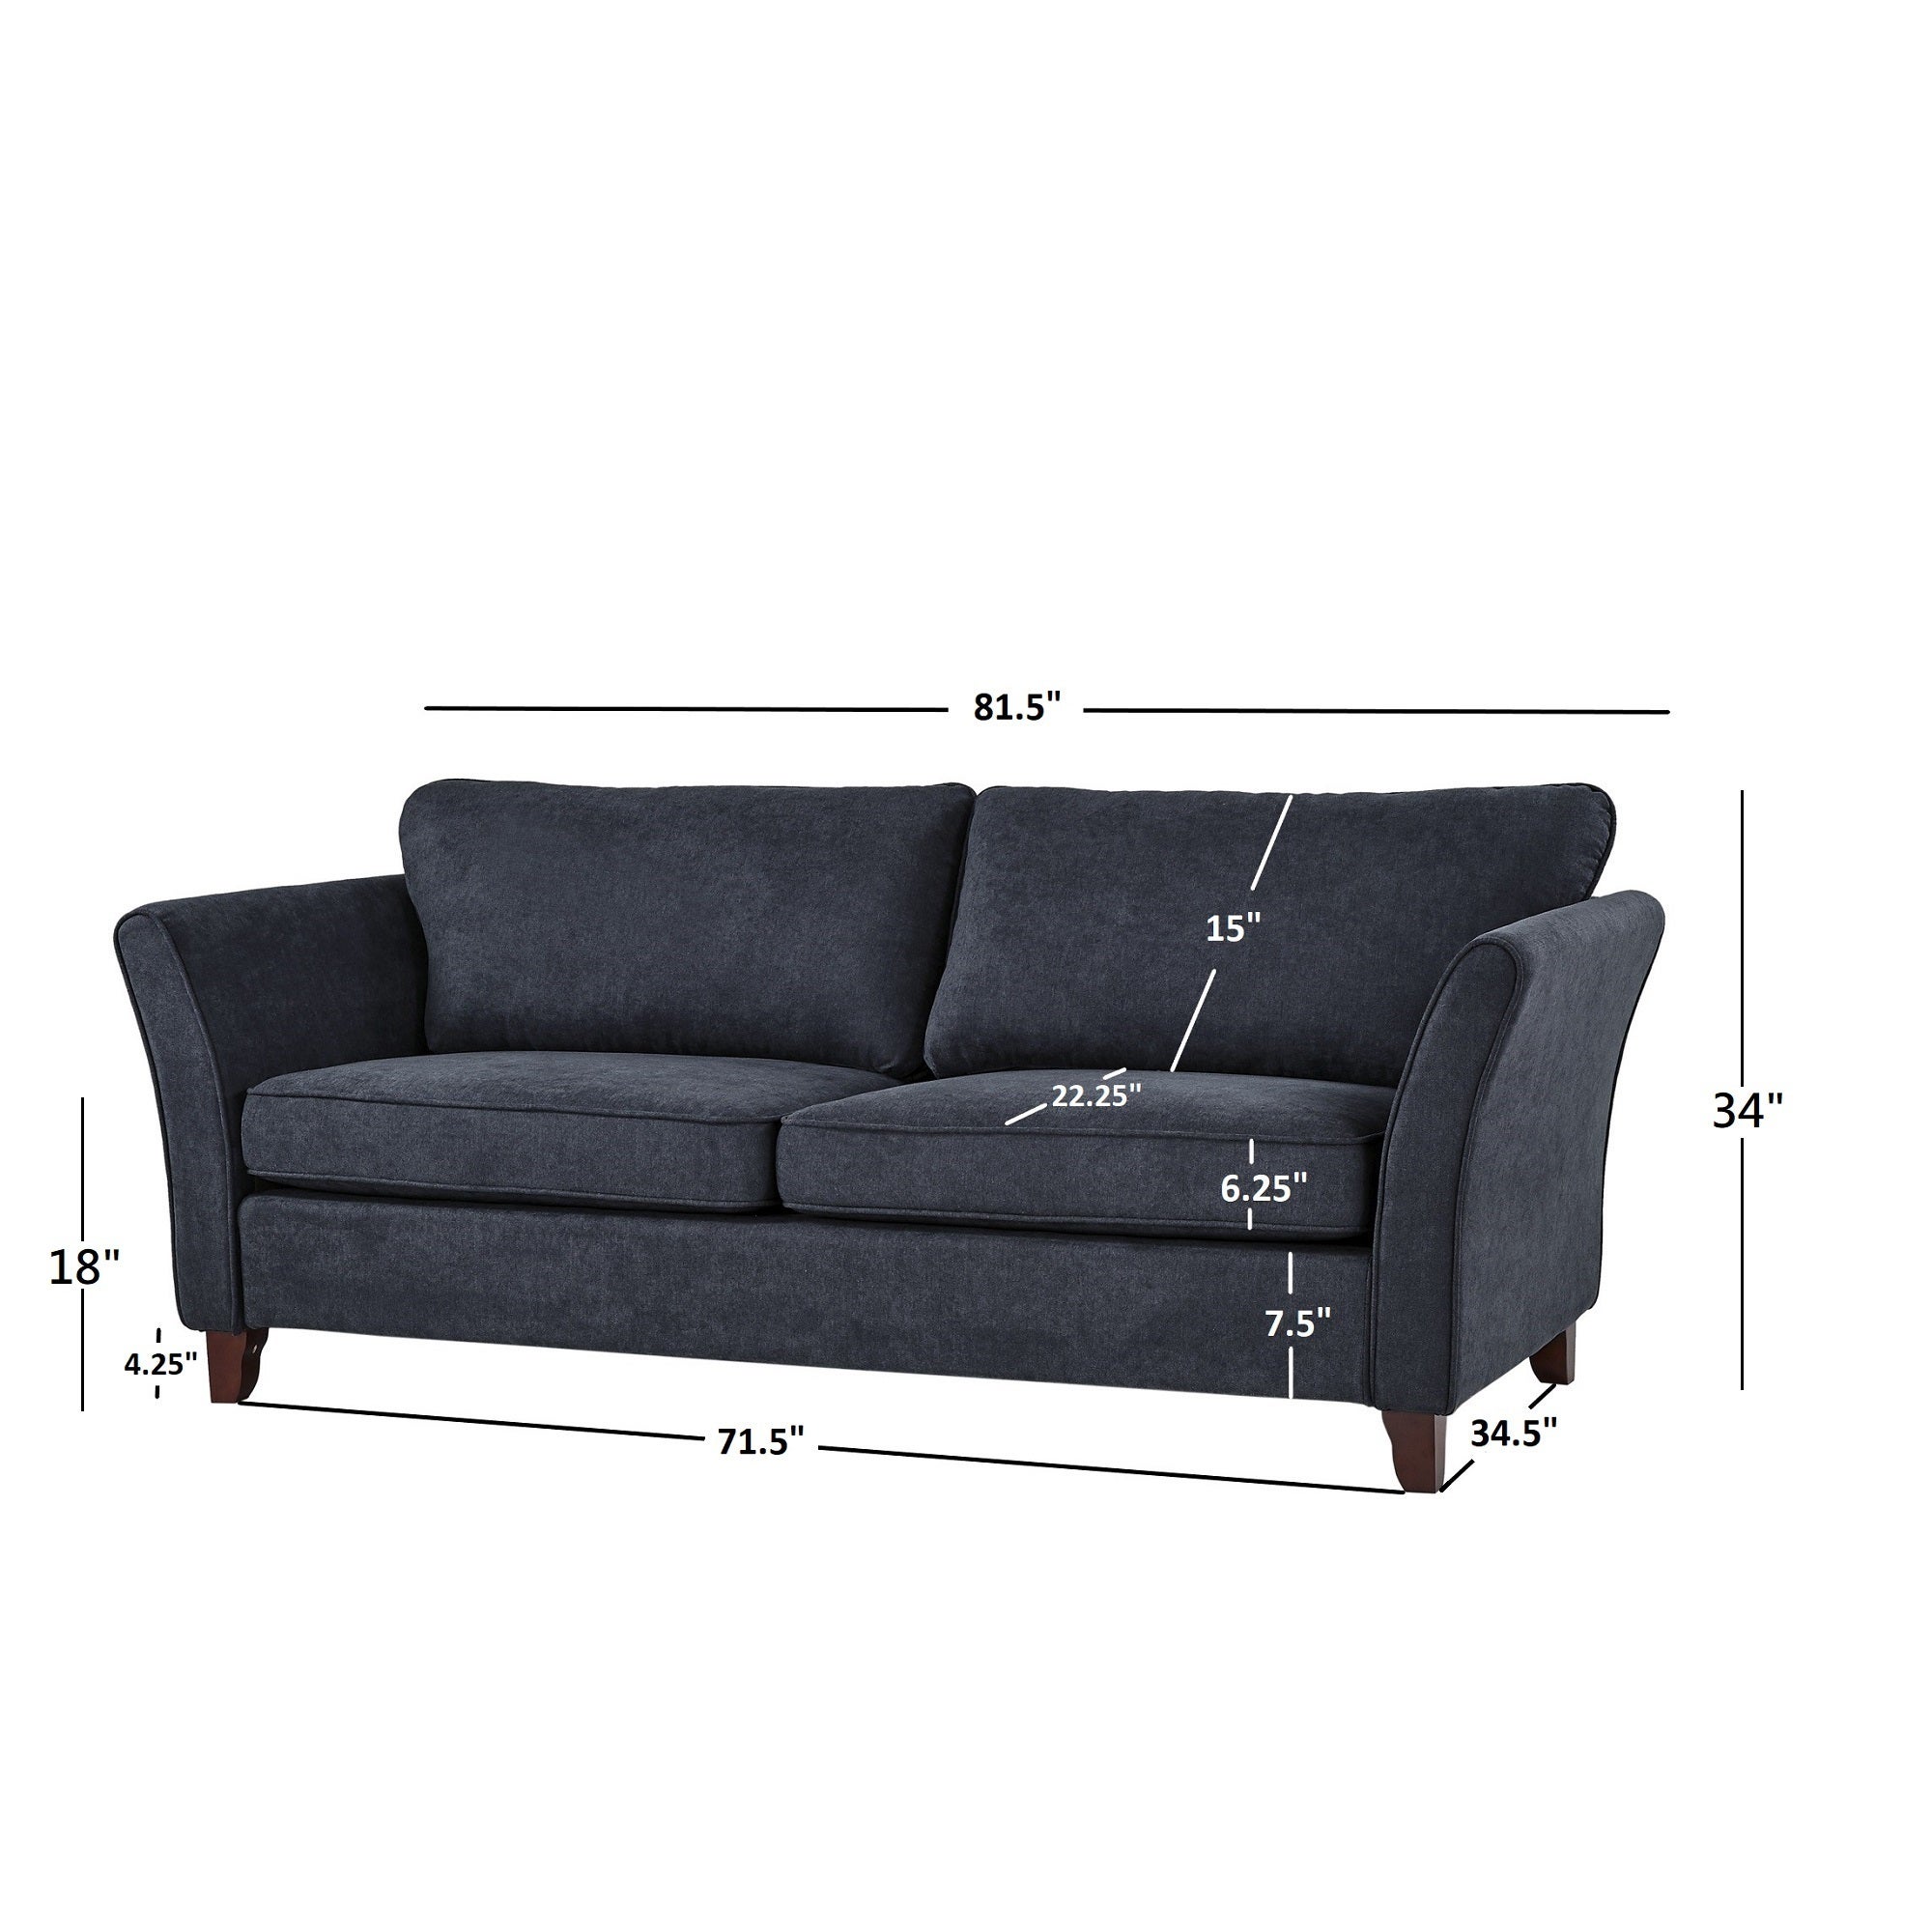 Kingbird Furniture Company Brand 30 Sets 30 Sets Sofa L 30 Sets Factory 12